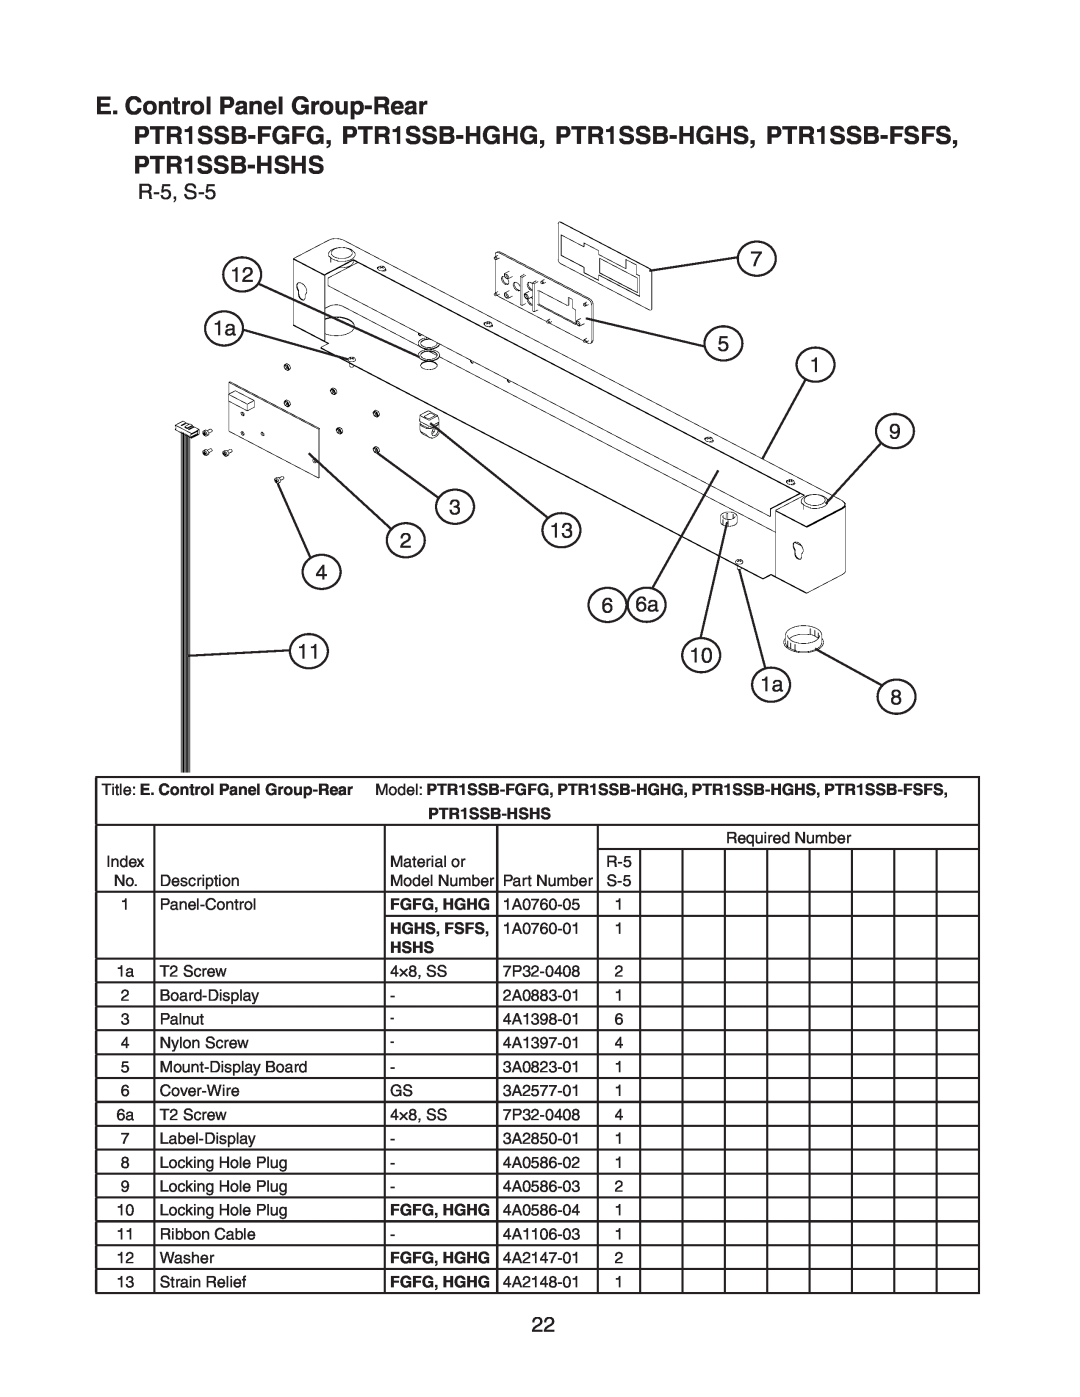 Hoshizaki PTR1SSB-HSHS manual E. Control Panel Group-Rear, 12 1a, 7 5 1 9 13 66a 10 1a, Fgfg, Hghg, Hghs, Fsfs, Hshs 